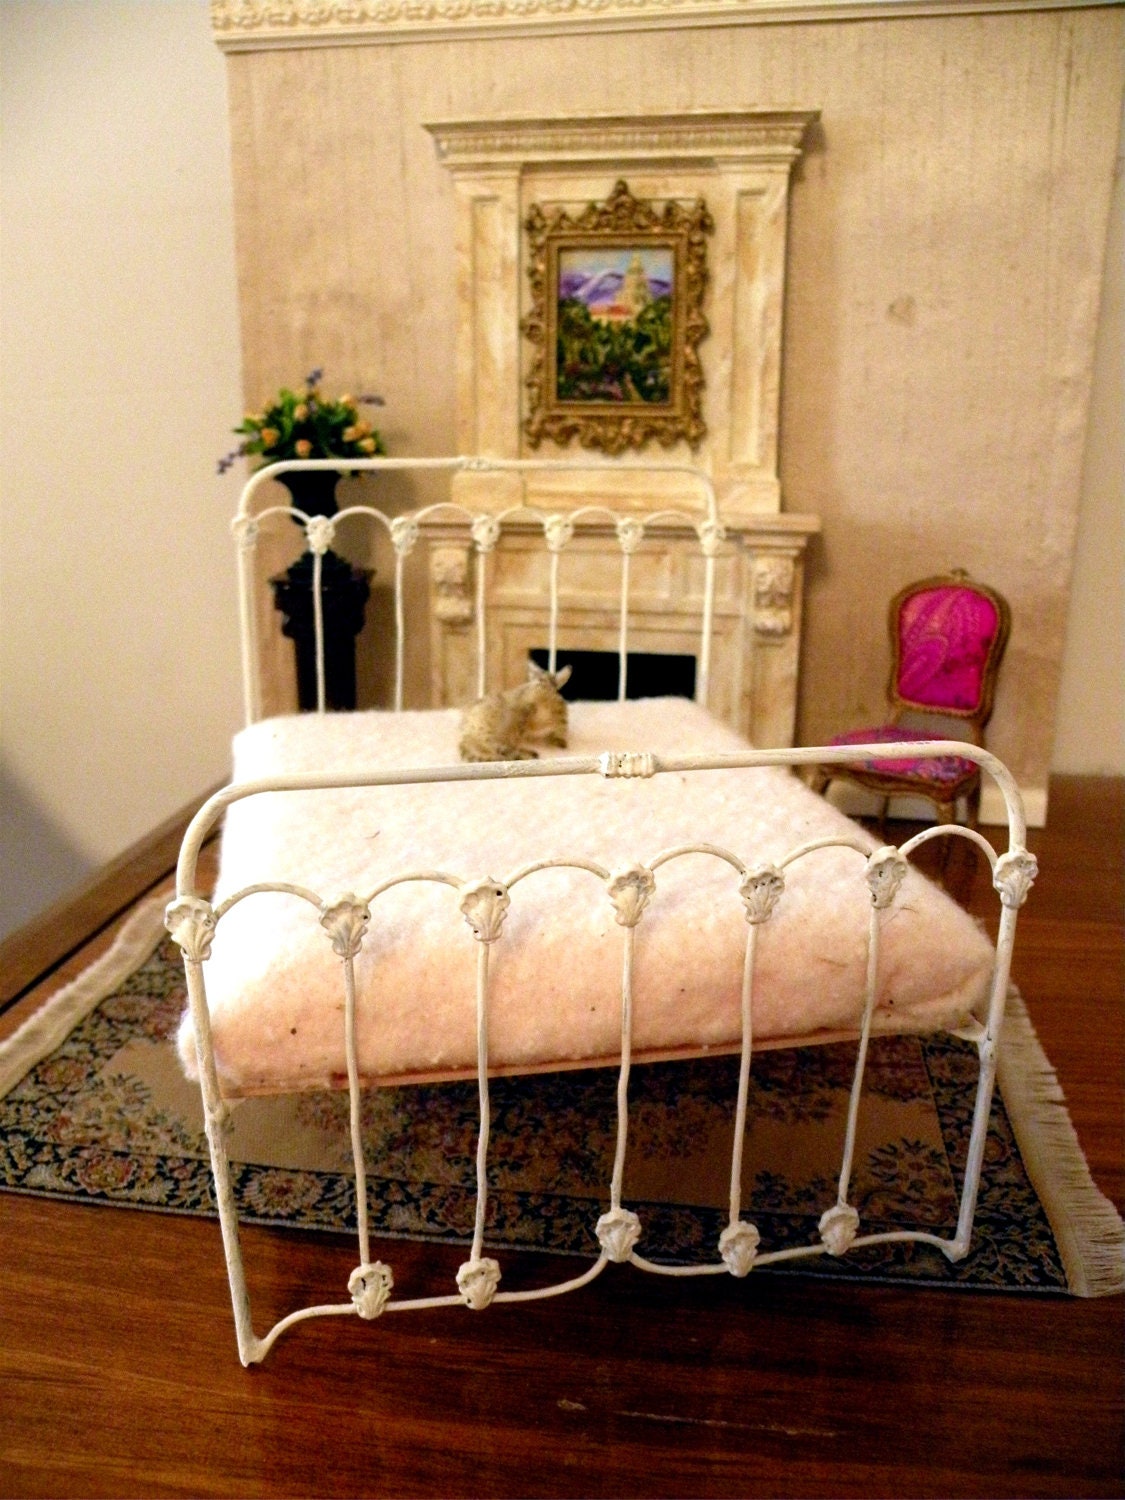 Dollhouse Miniature 1:12 Scale Artisan Un-dressed Wrought Iron Bed "Summerwind" - ALifeInMiniature